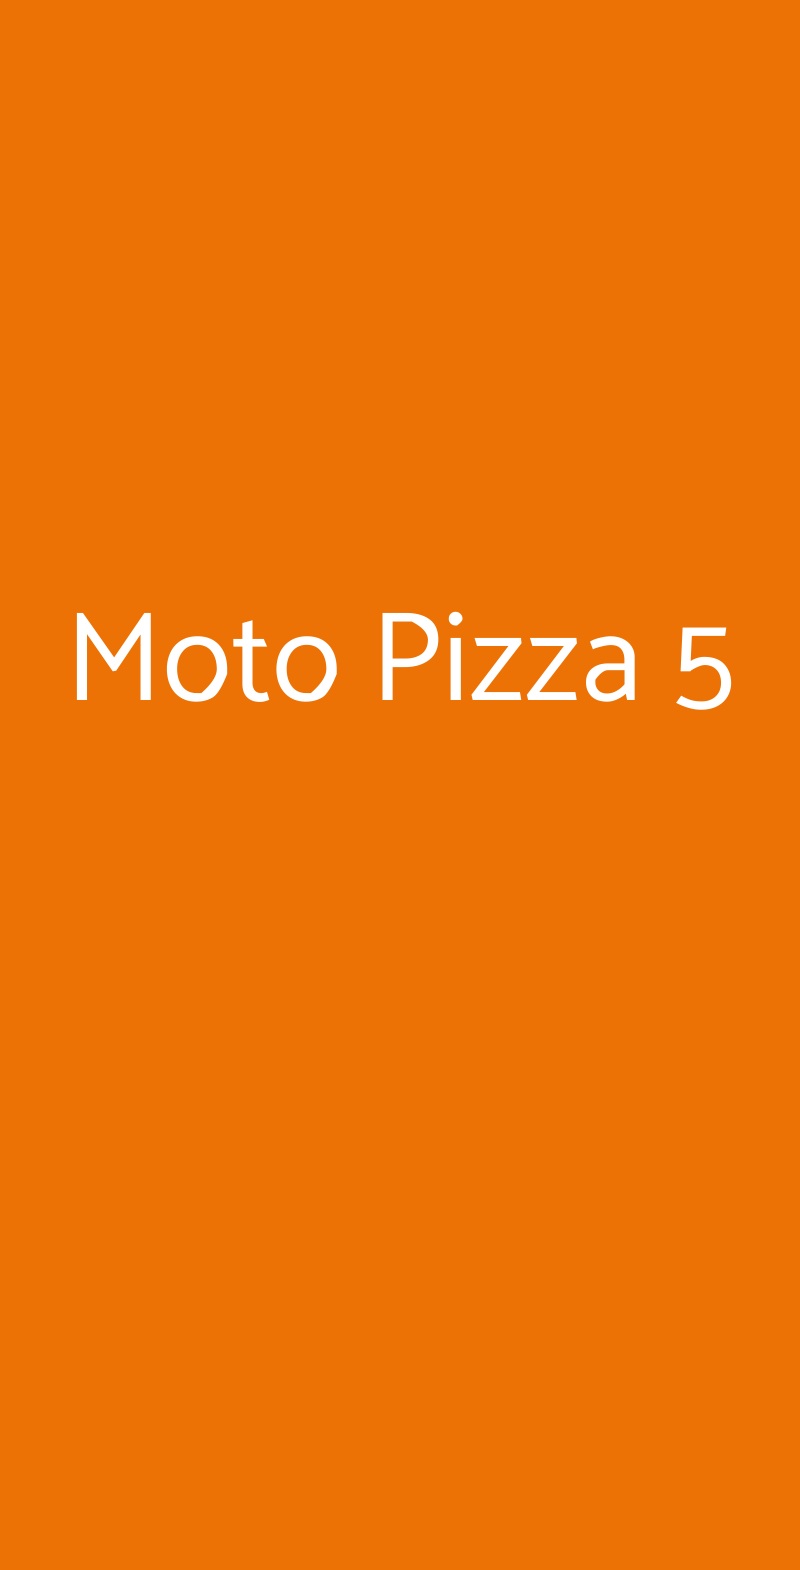 Moto Pizza 5 Milano menù 1 pagina